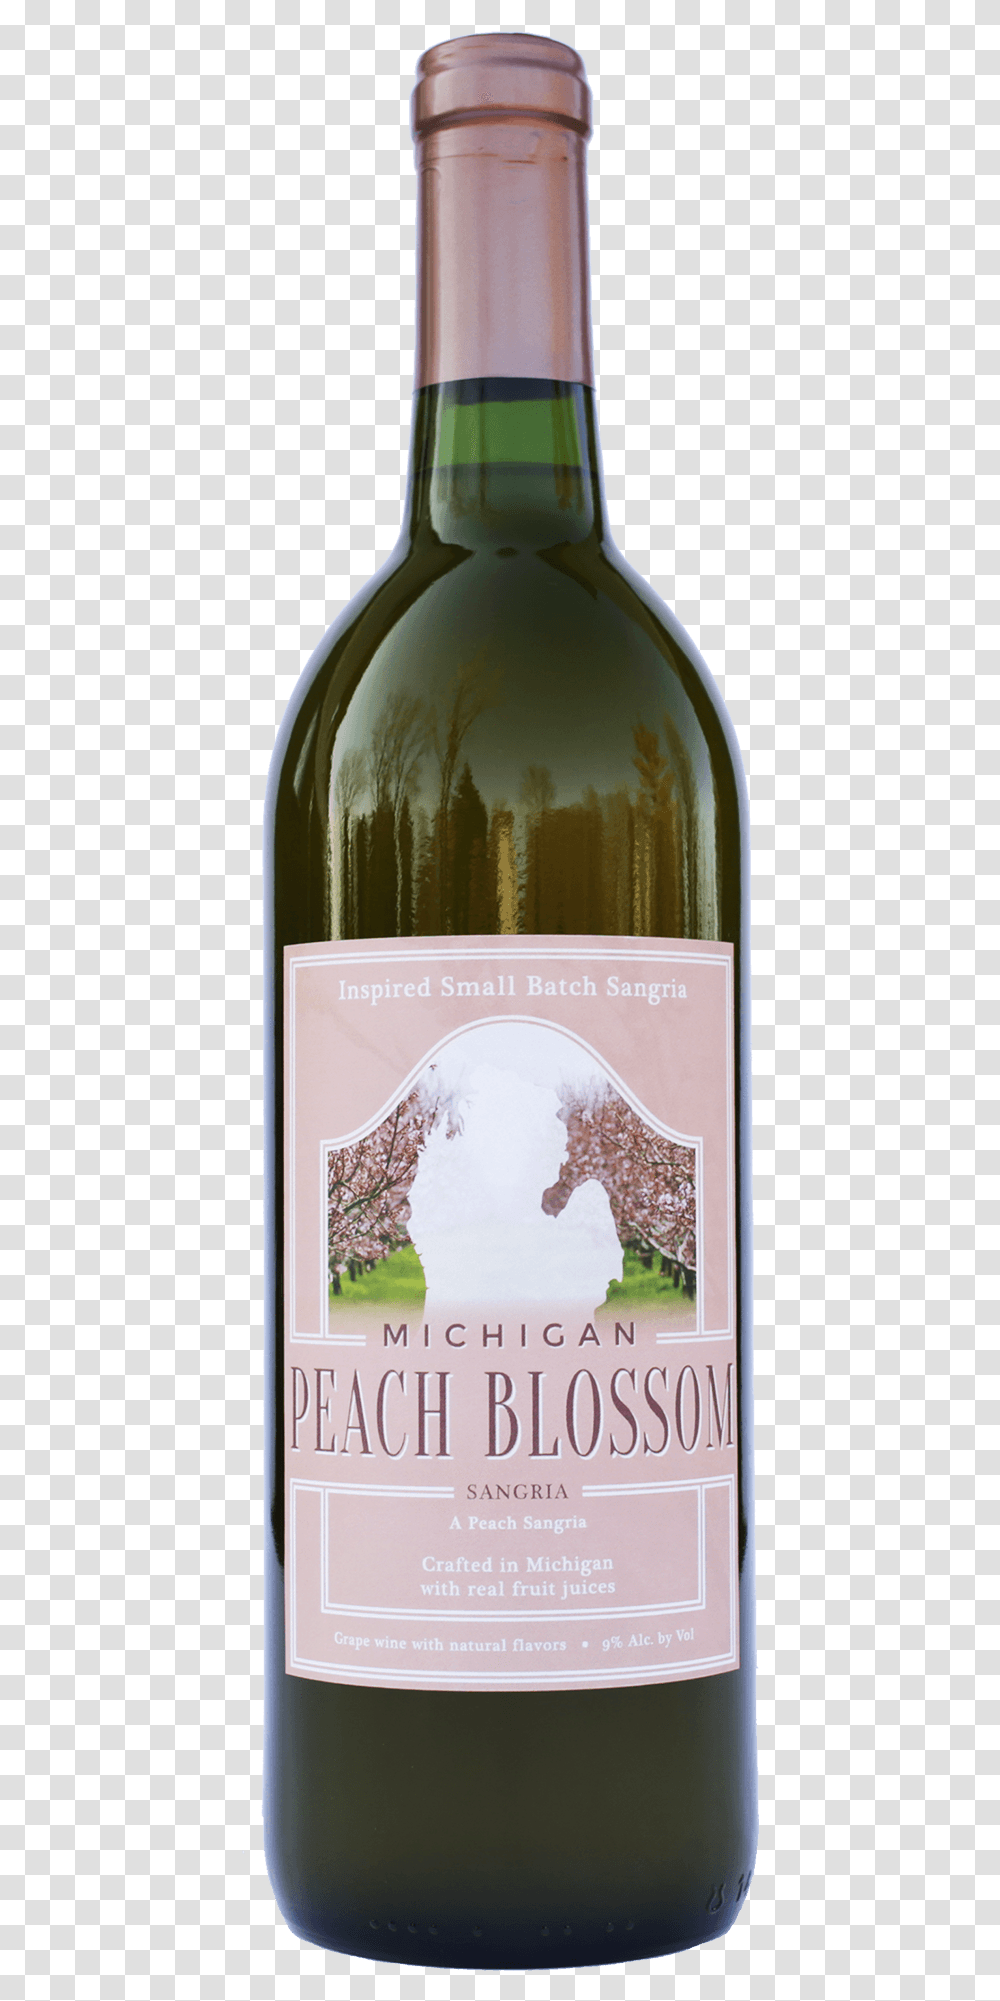 Michigan Peach Blossom Sangria A Peach Sangria Glass Bottle, Wine, Alcohol, Beverage, Drink Transparent Png